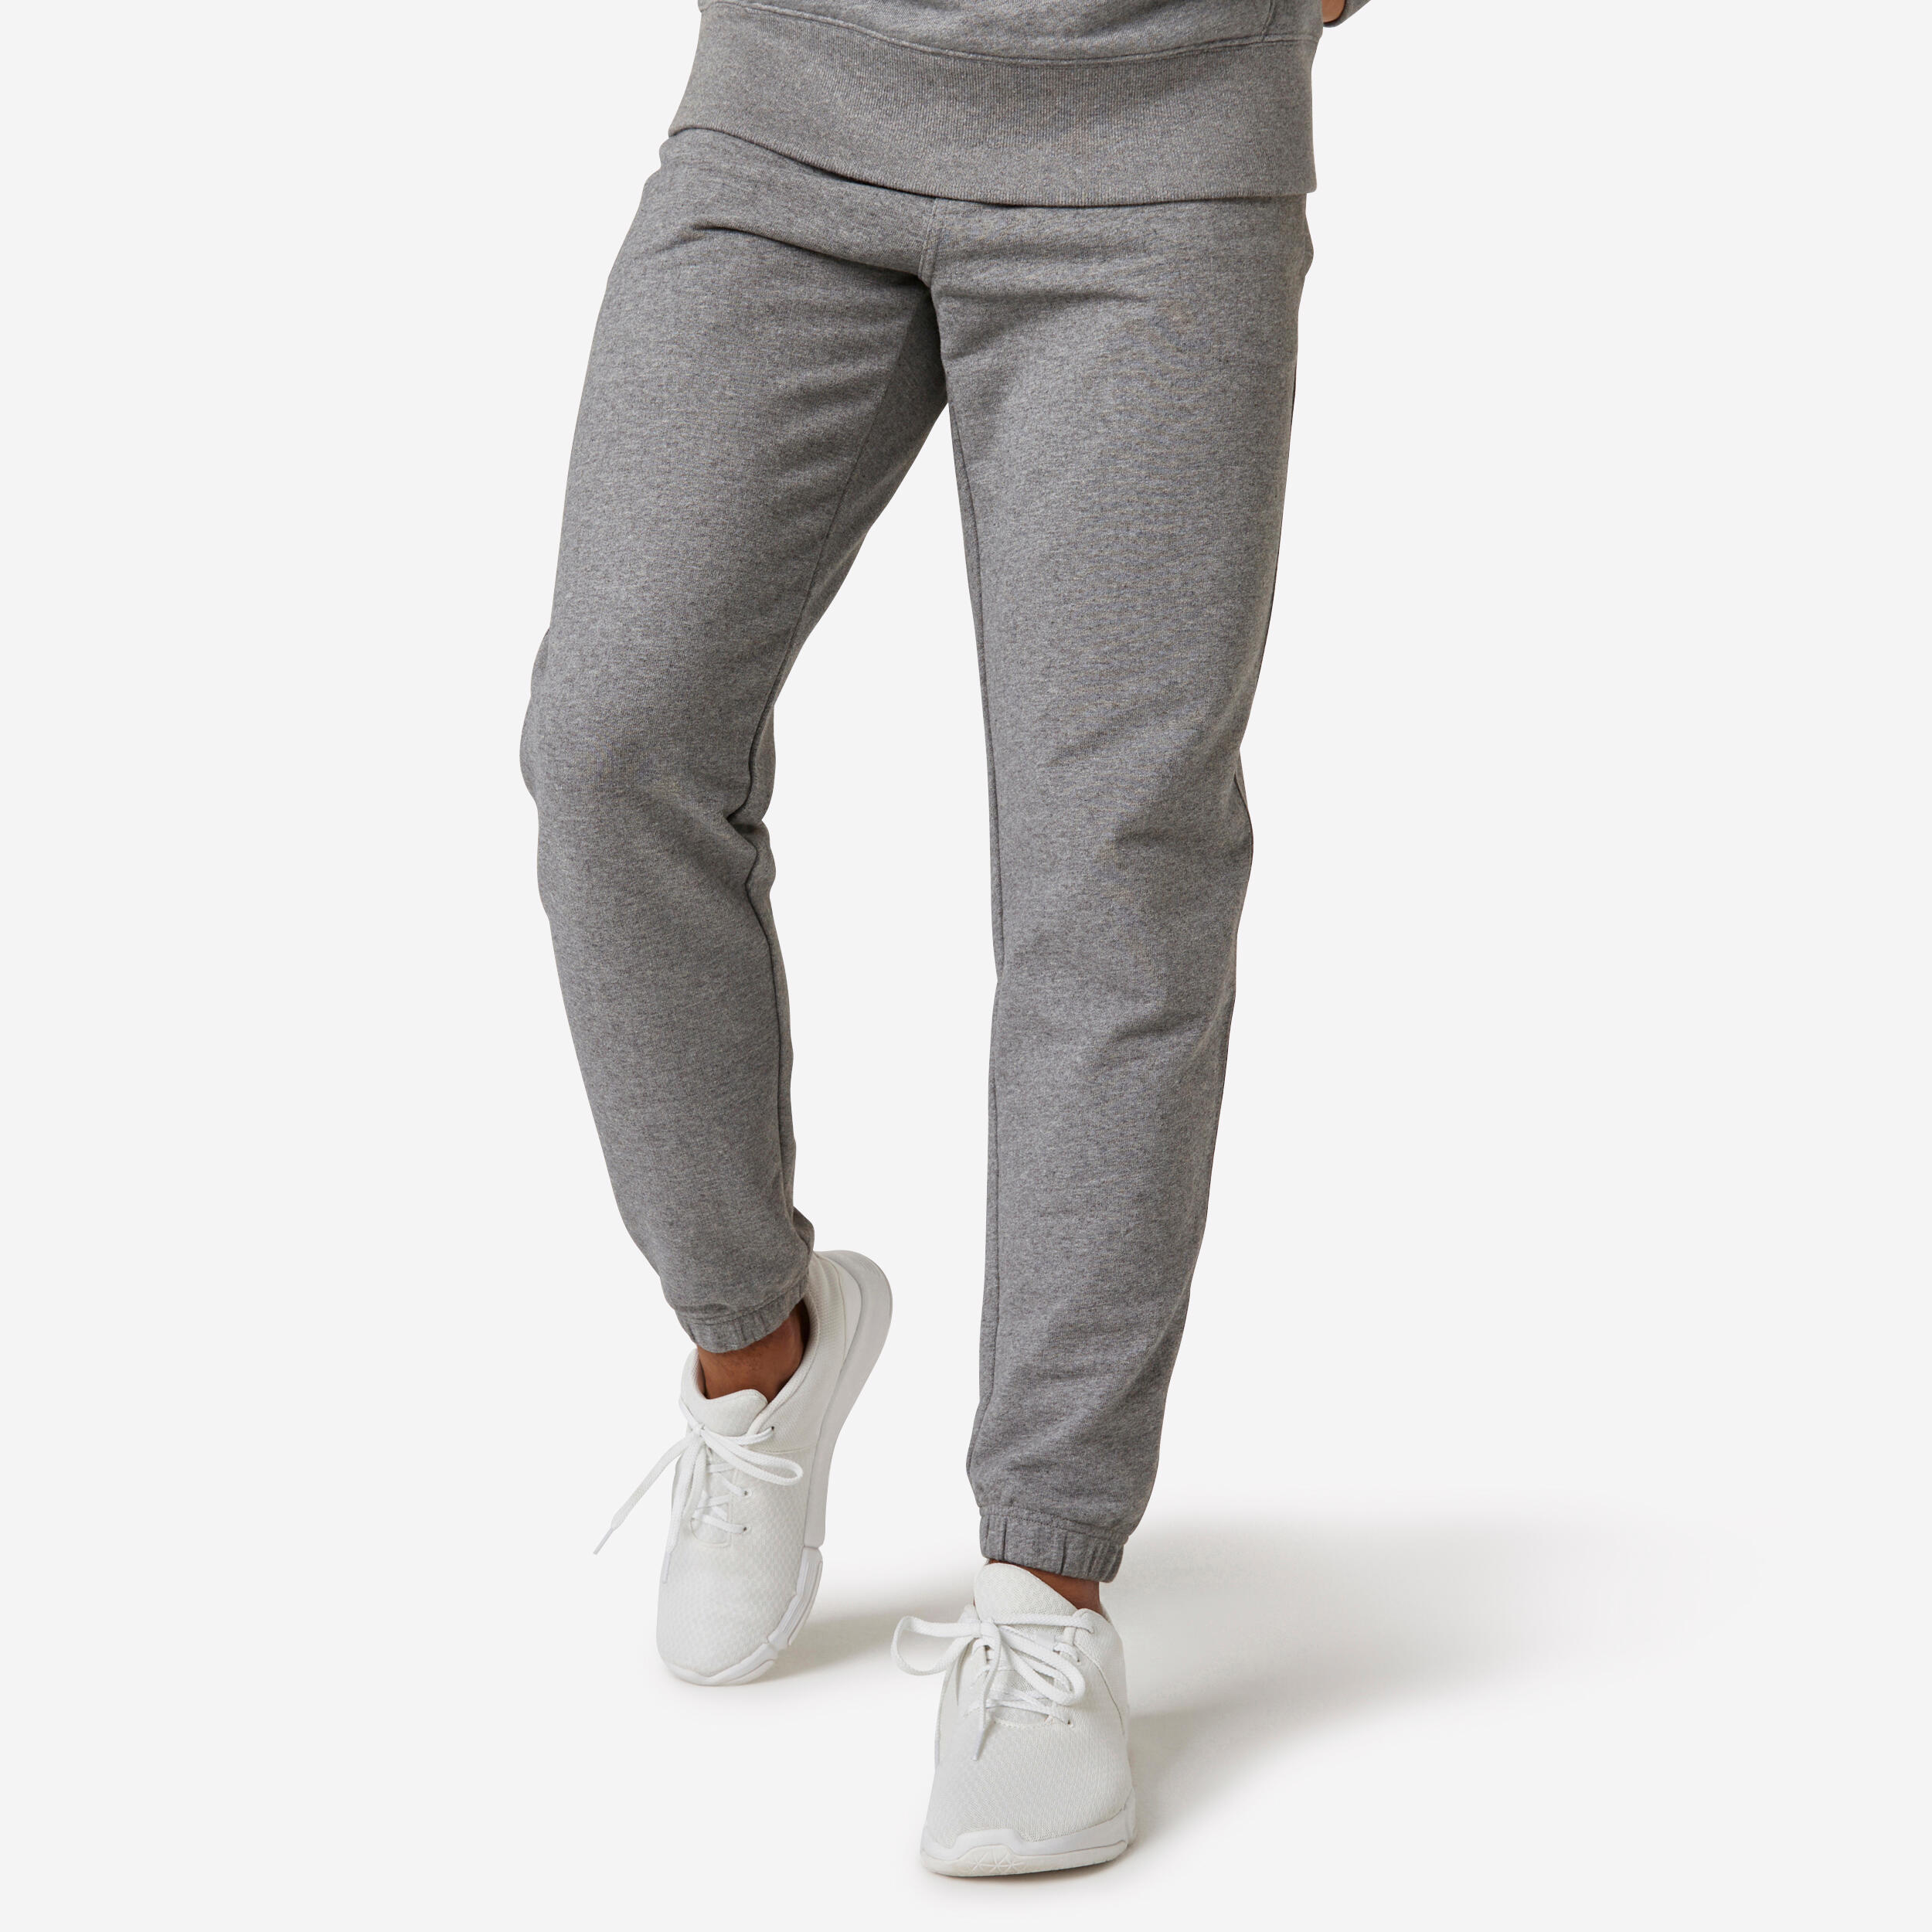 Men's Slim Fit Pants - 500 - Grey - Domyos - Decathlon